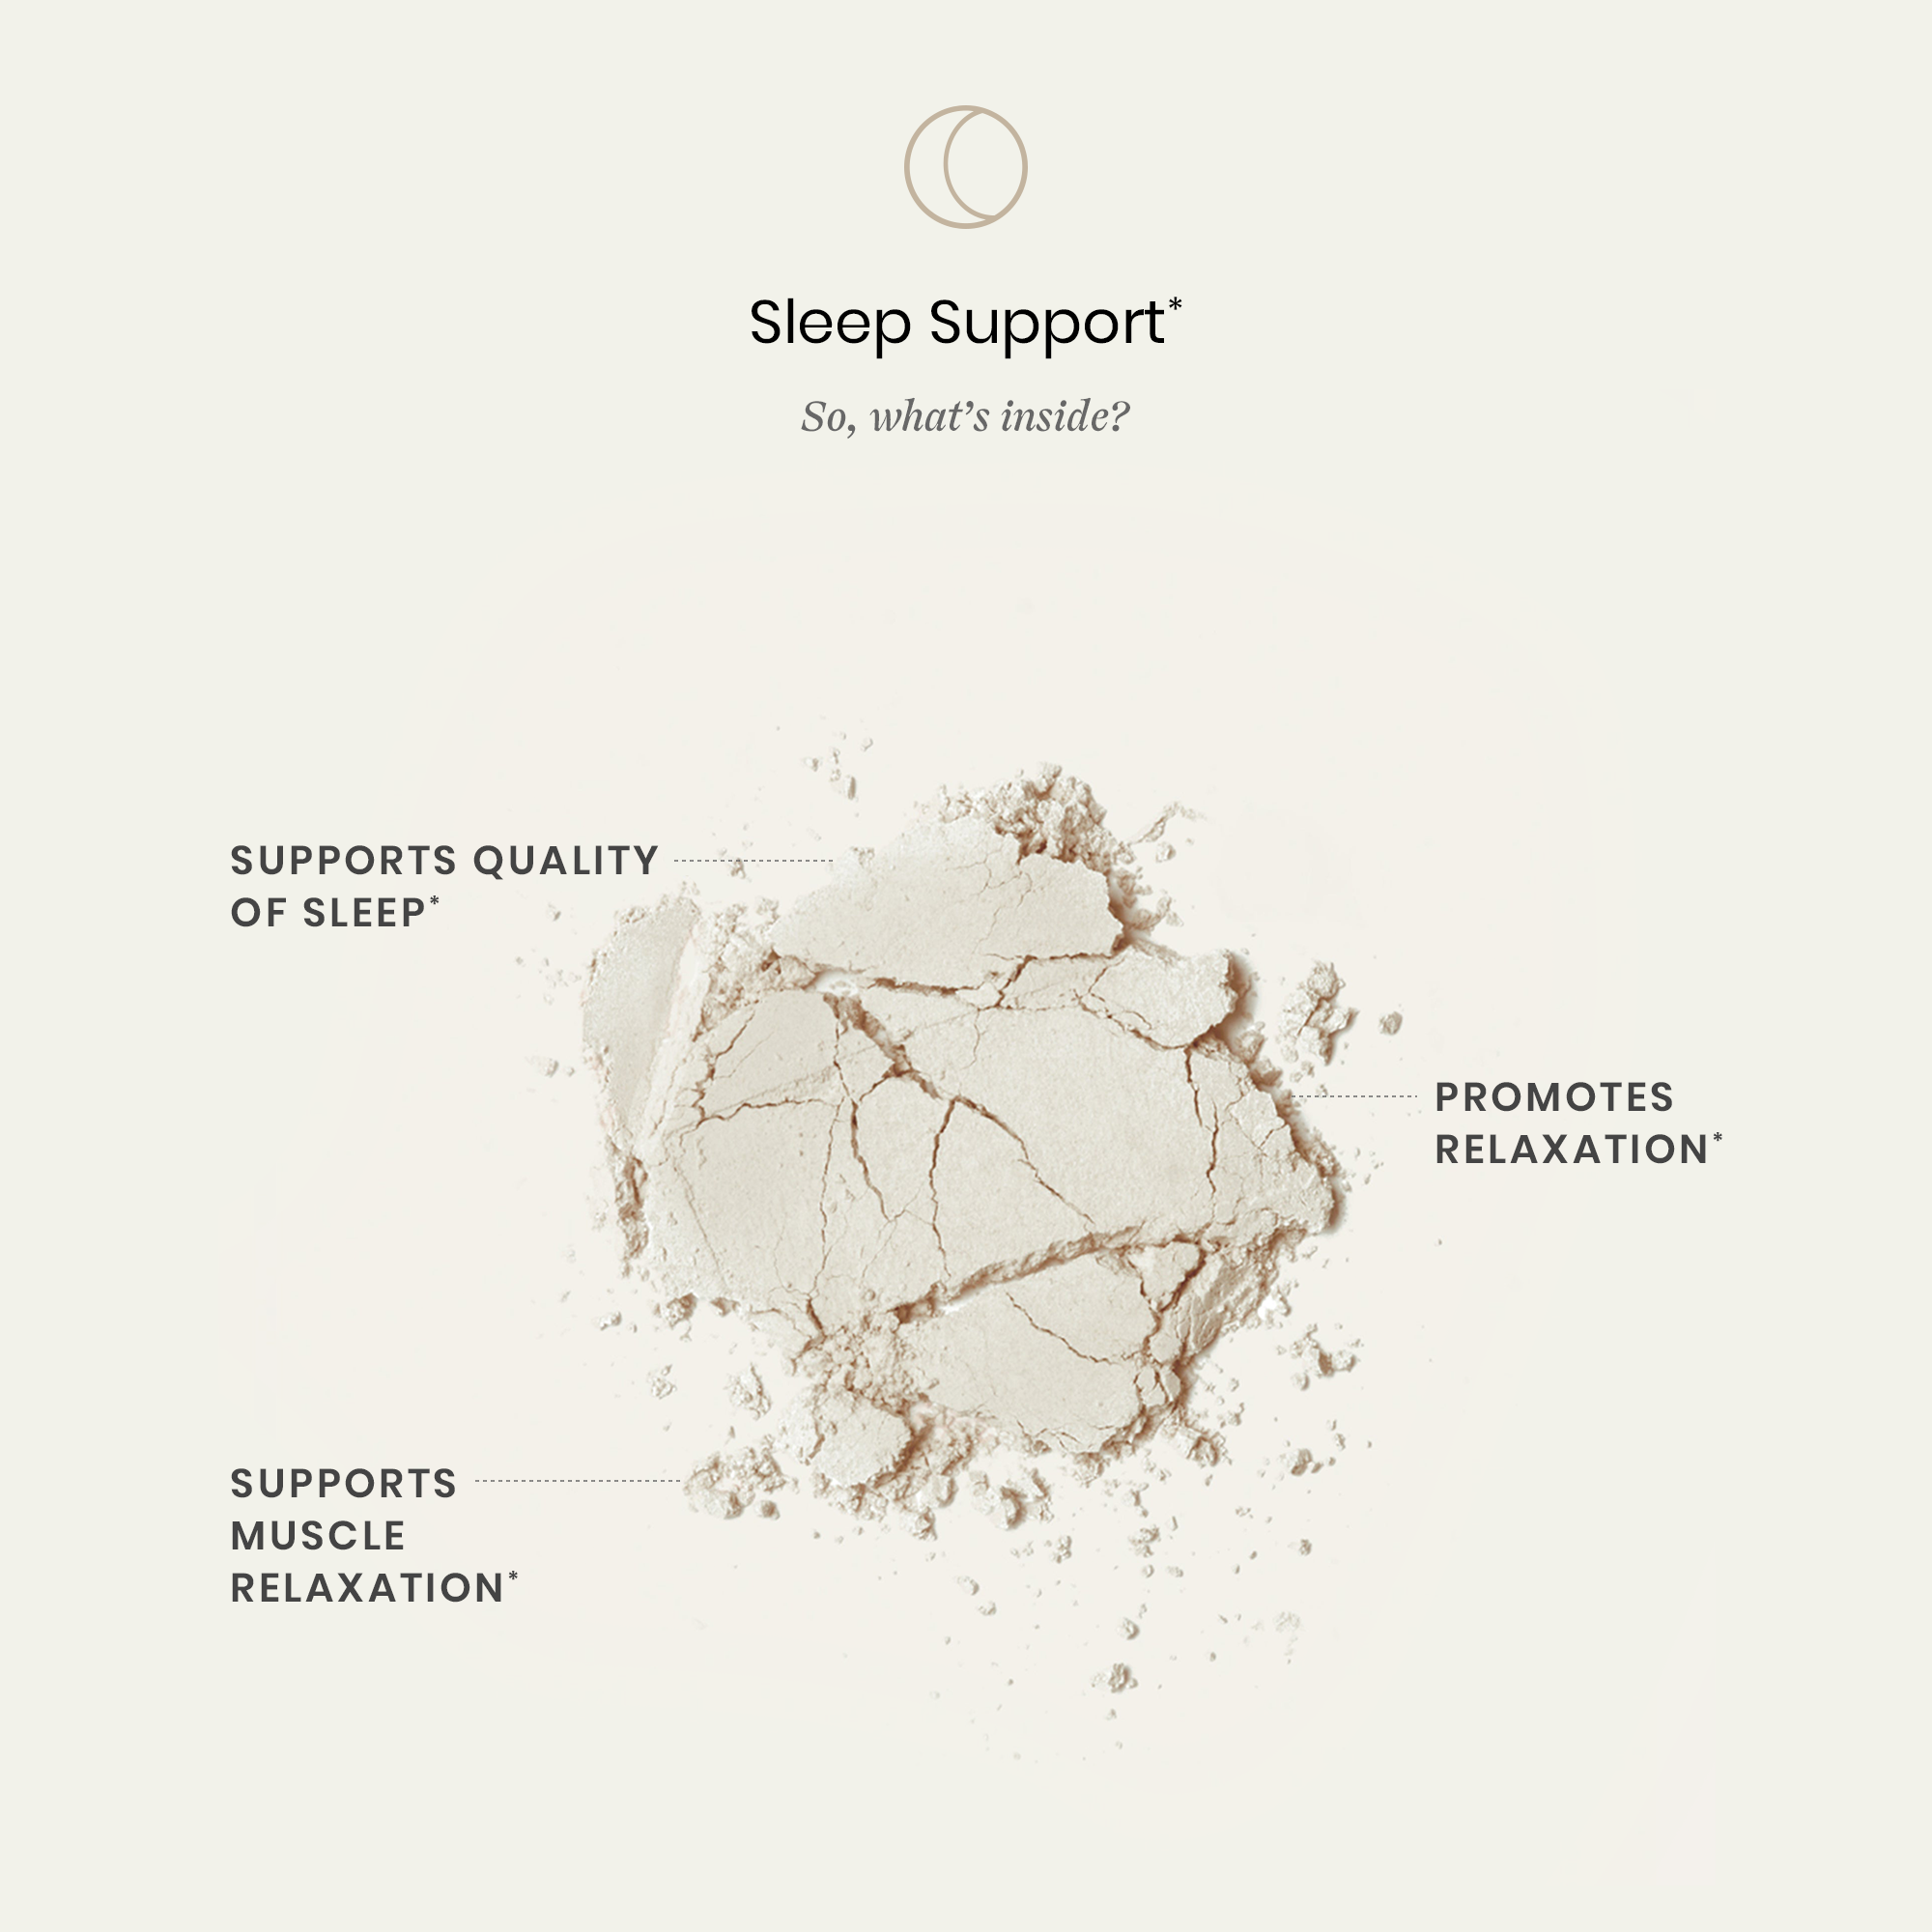 Sleep Support Ingredients and Benefits